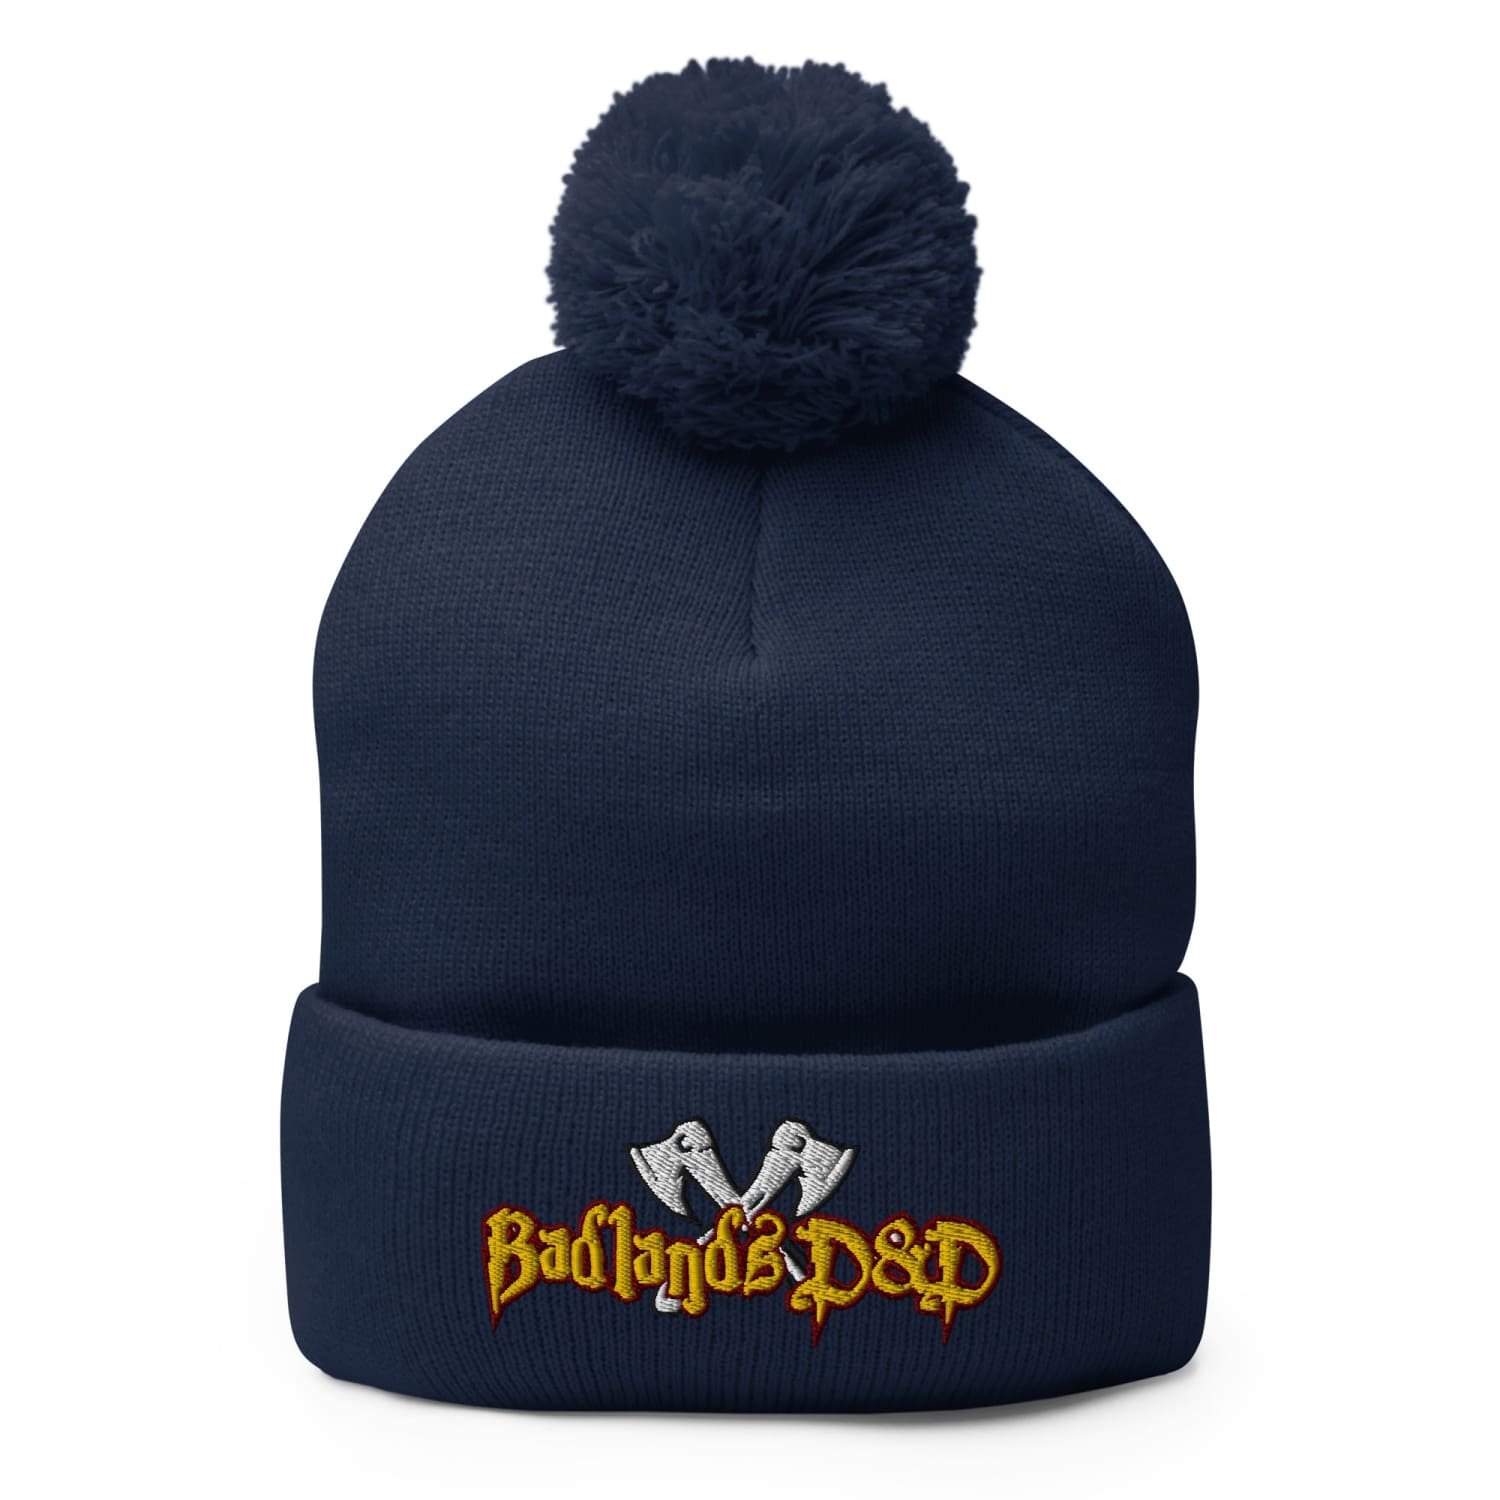 Badlands D&D Logo Pom-Pom Knit Beanie / Tuque - Navy